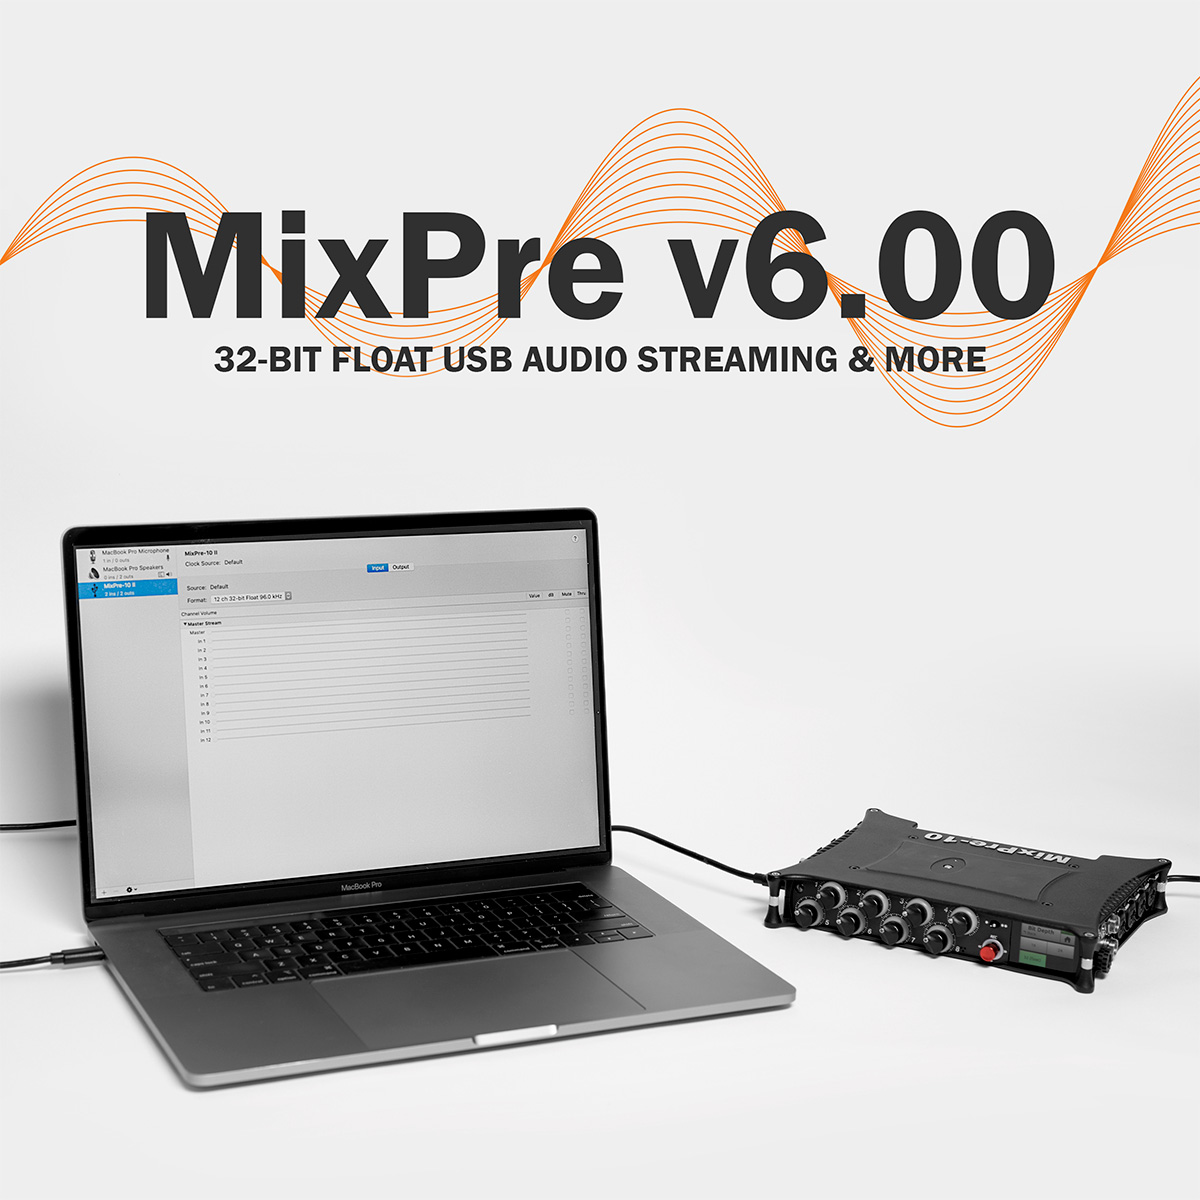 MixPre 6.00 Sound Devices